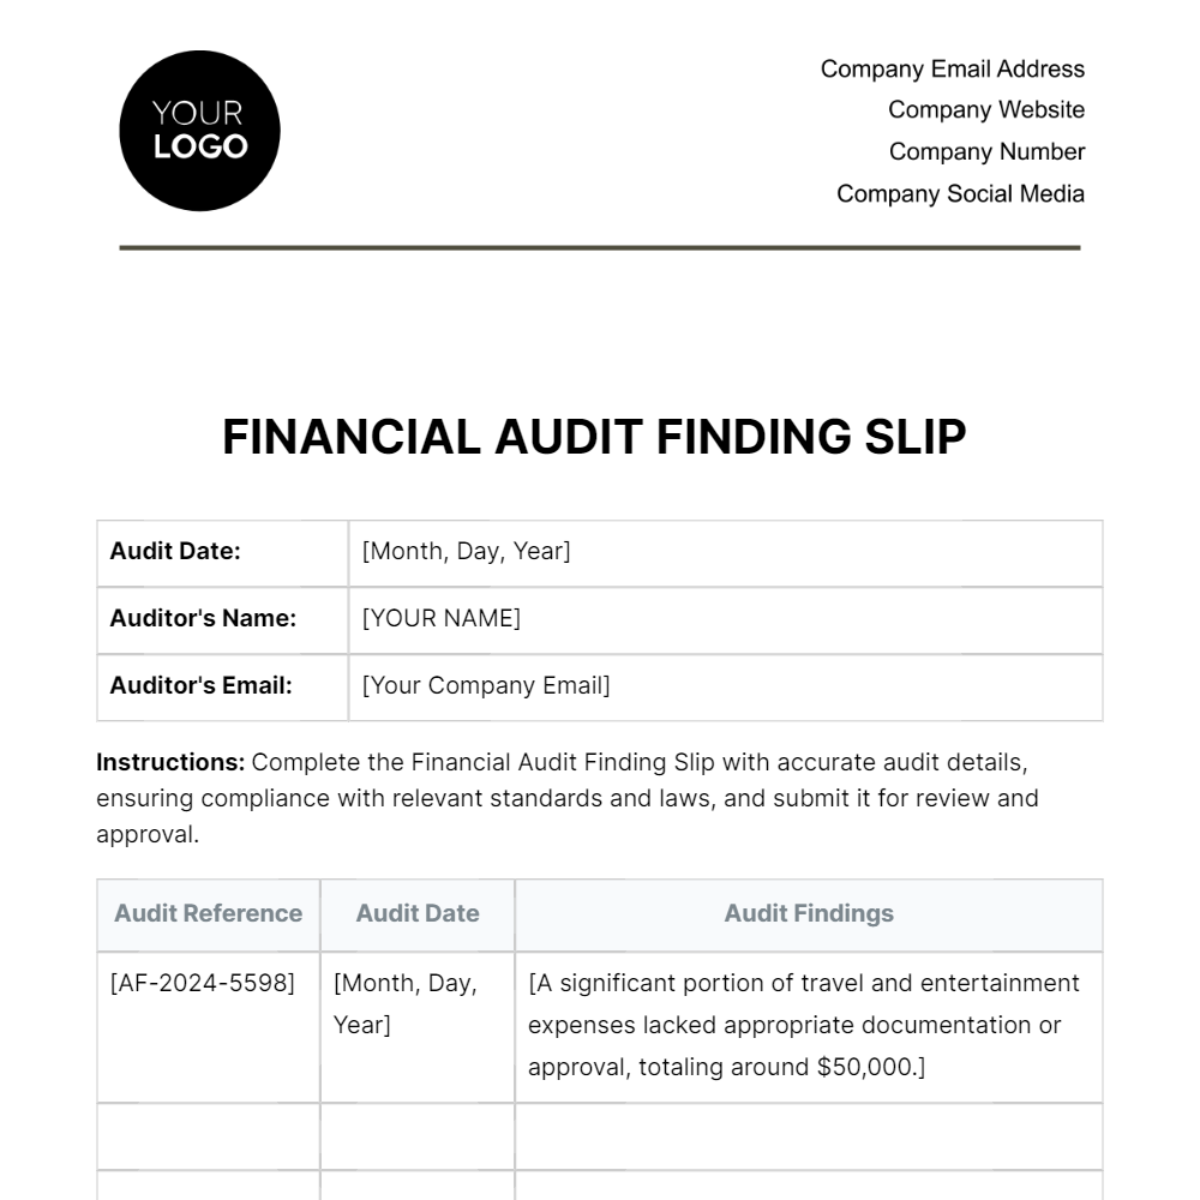 Financial Audit Finding Slip Template